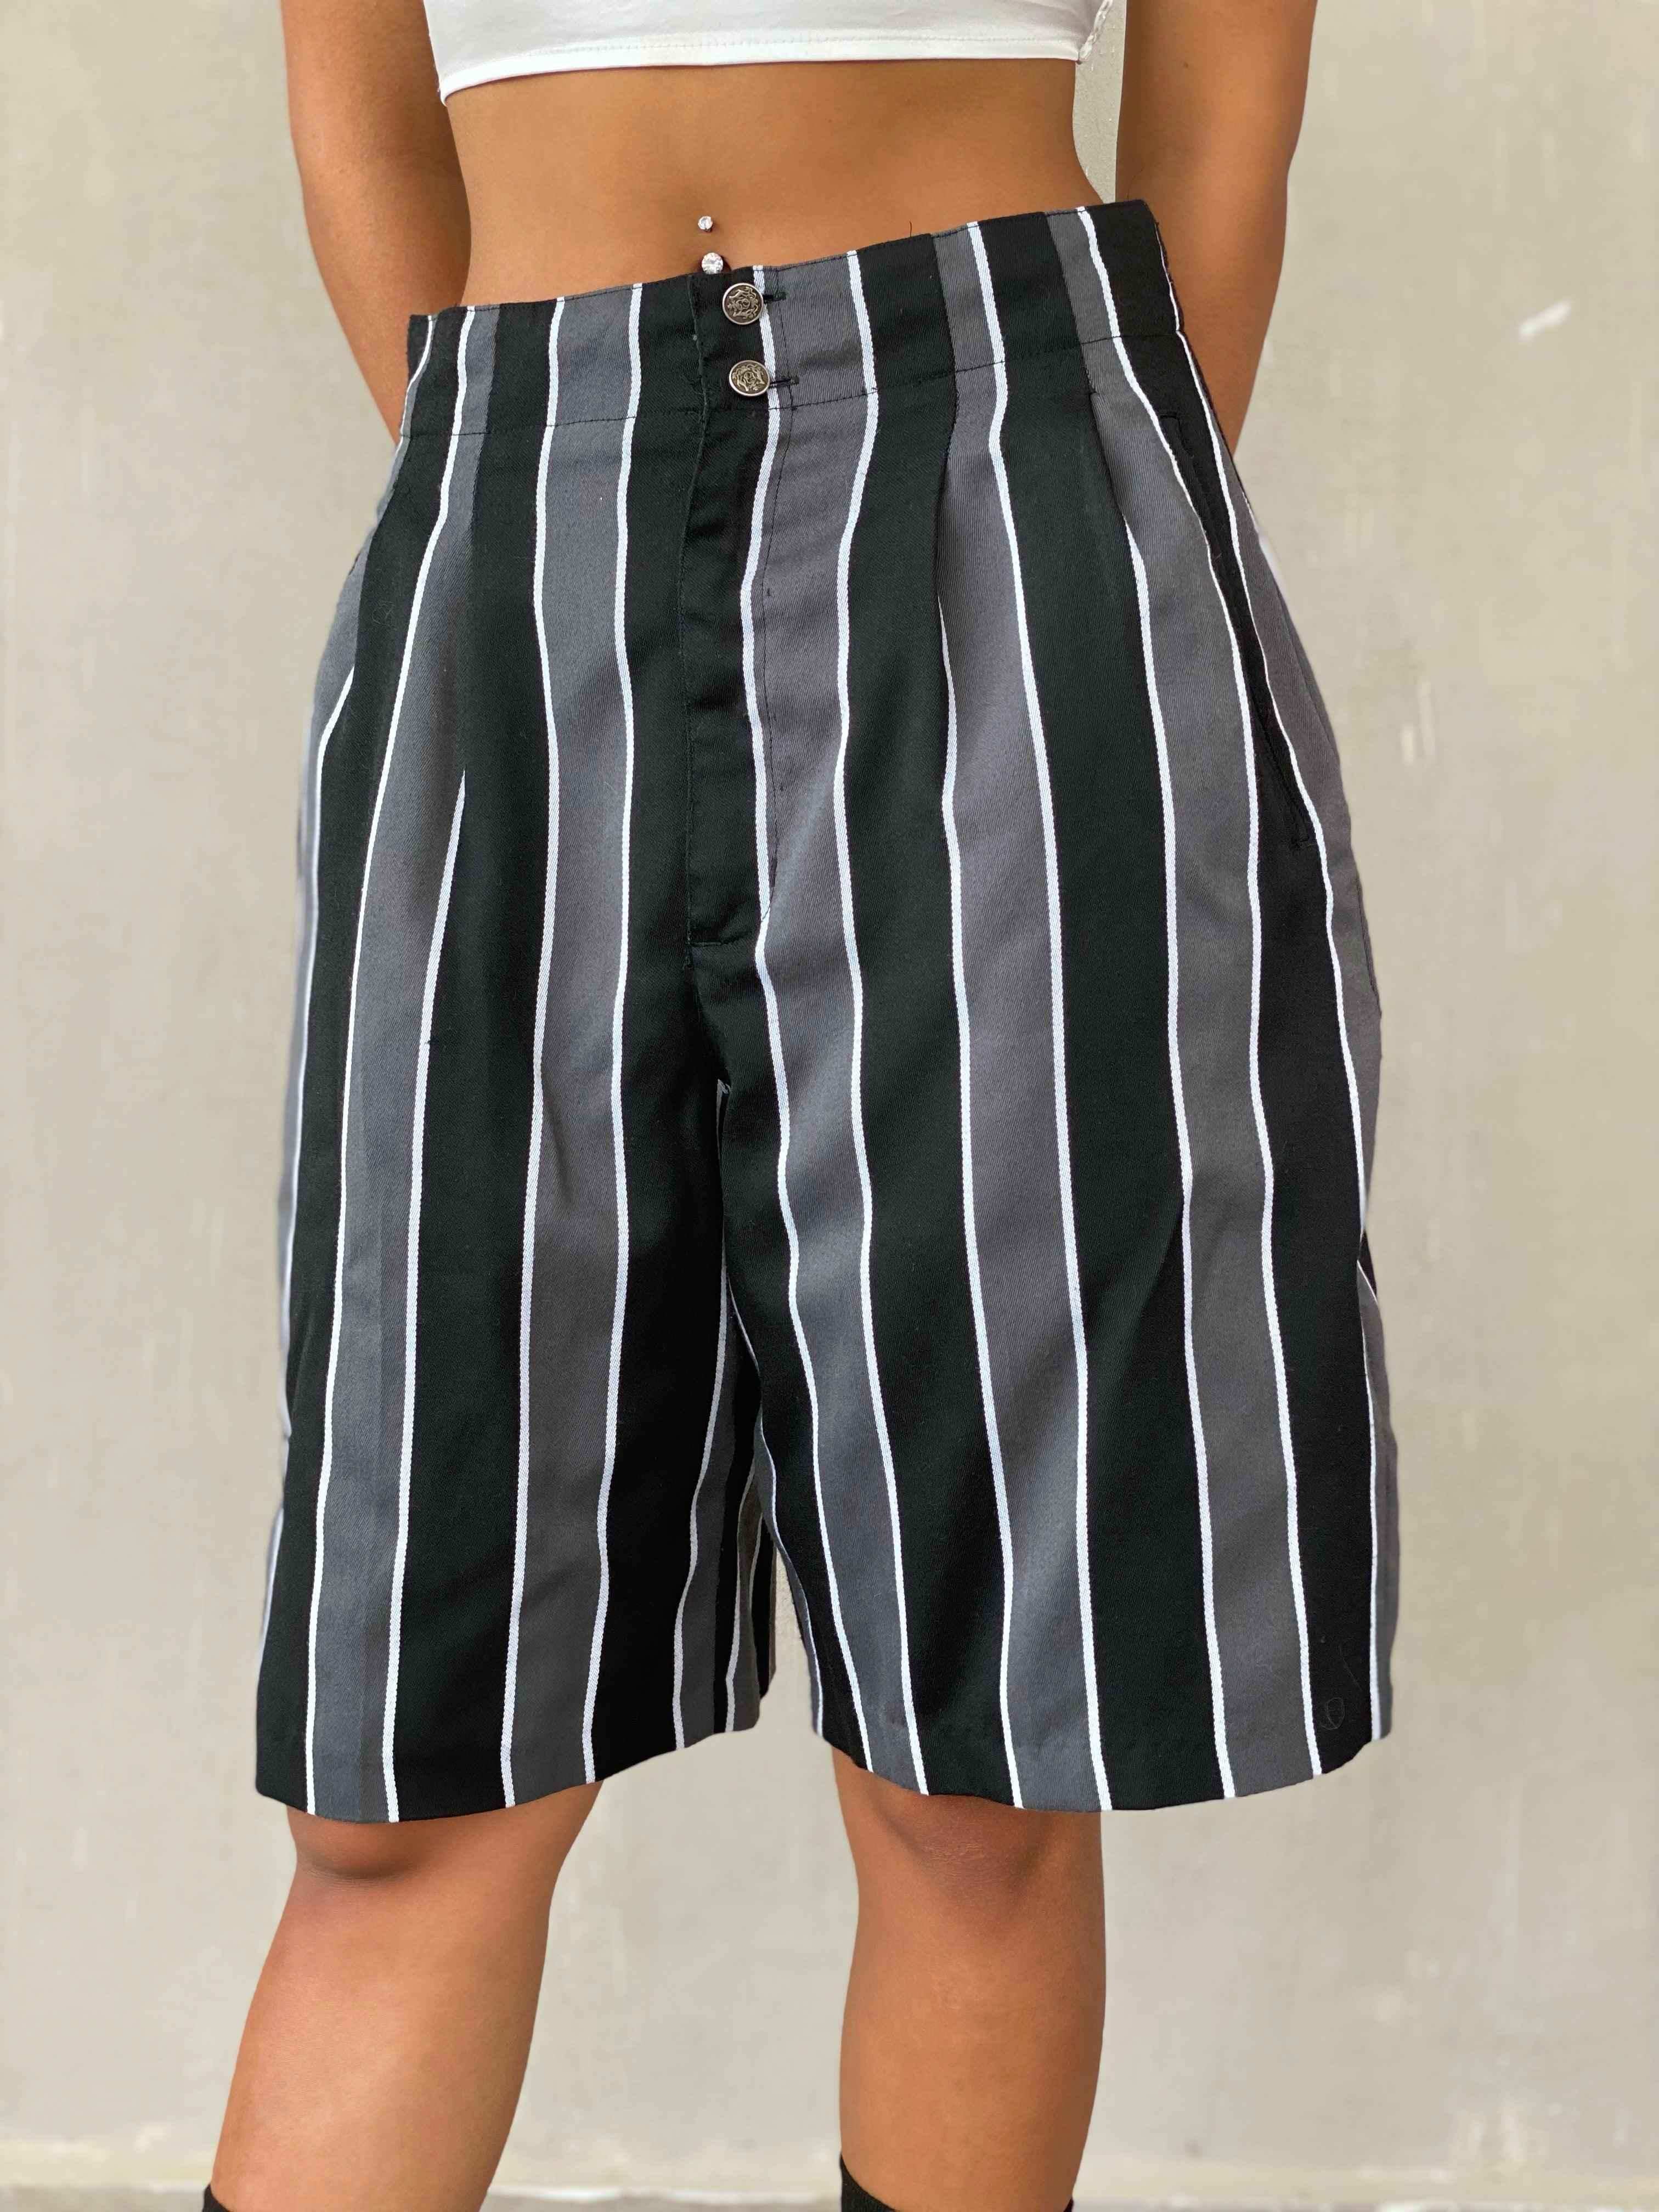 Vintage Impuls Culture Striped Shorts - Balagan Vintage Shorts Rahmeh, shorts, striped, striped shorts